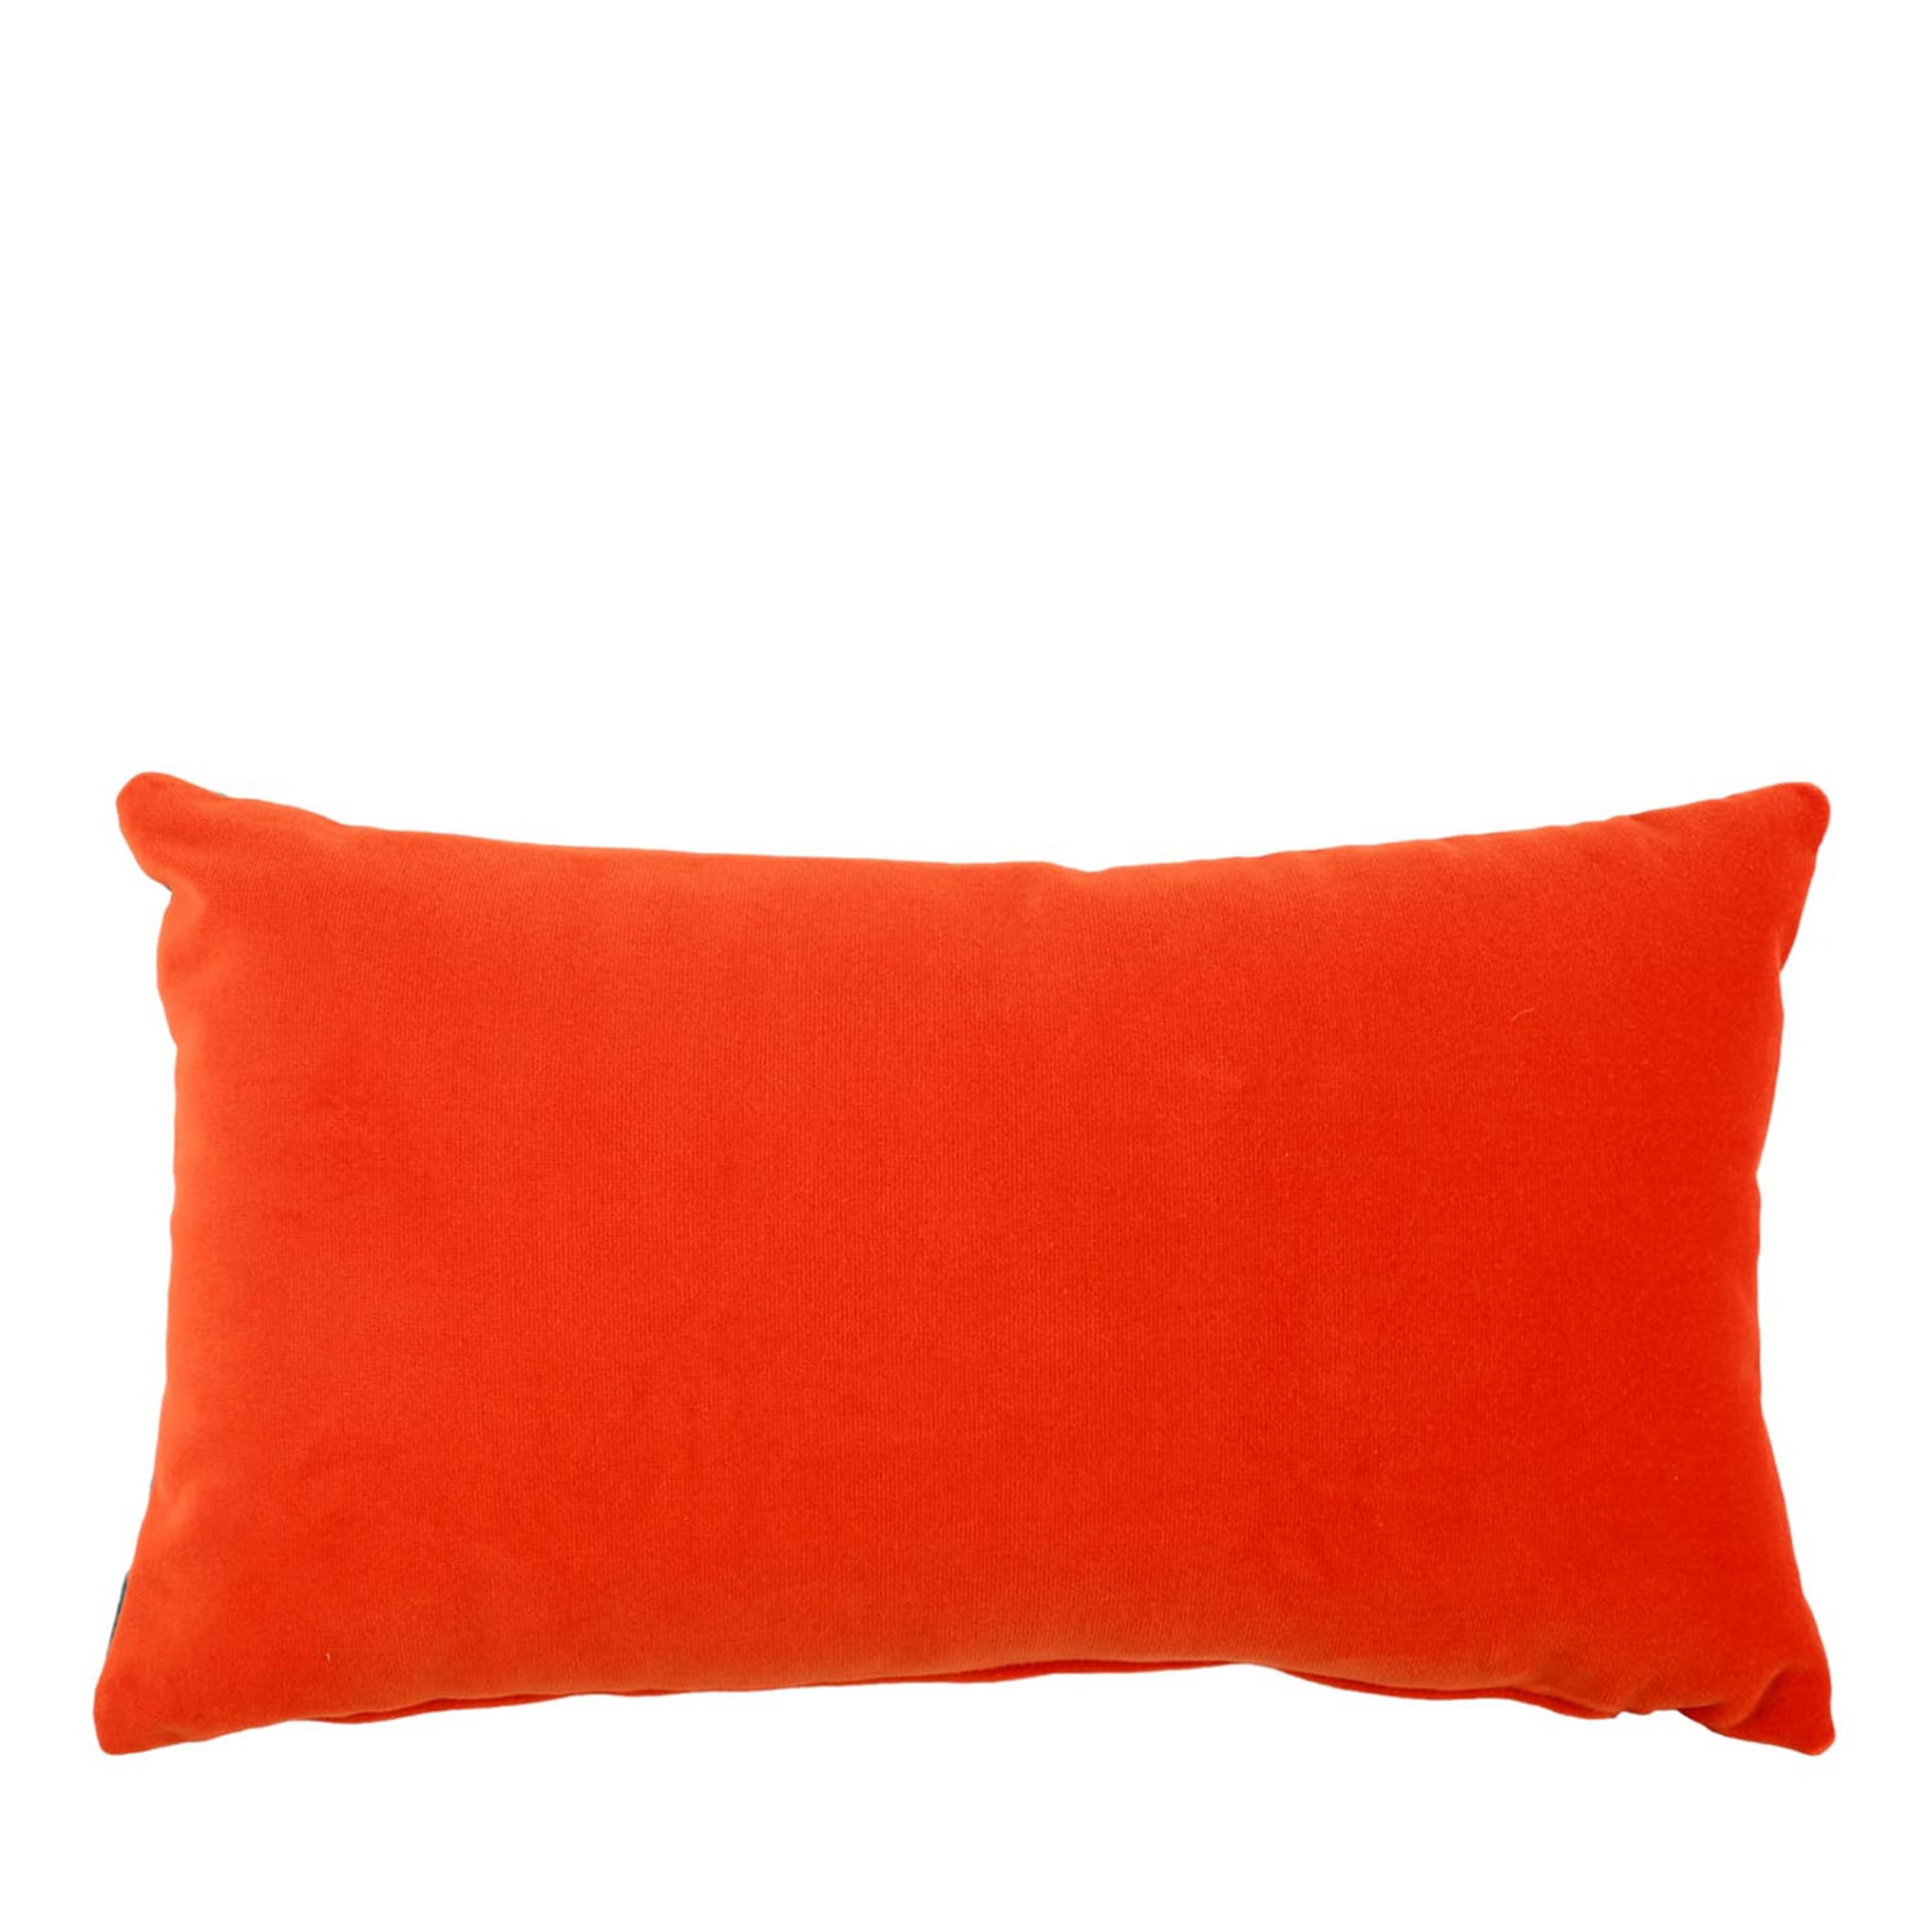 Tiffany Bis Cushion in polka dots jacquard fabric - Alternative view 1